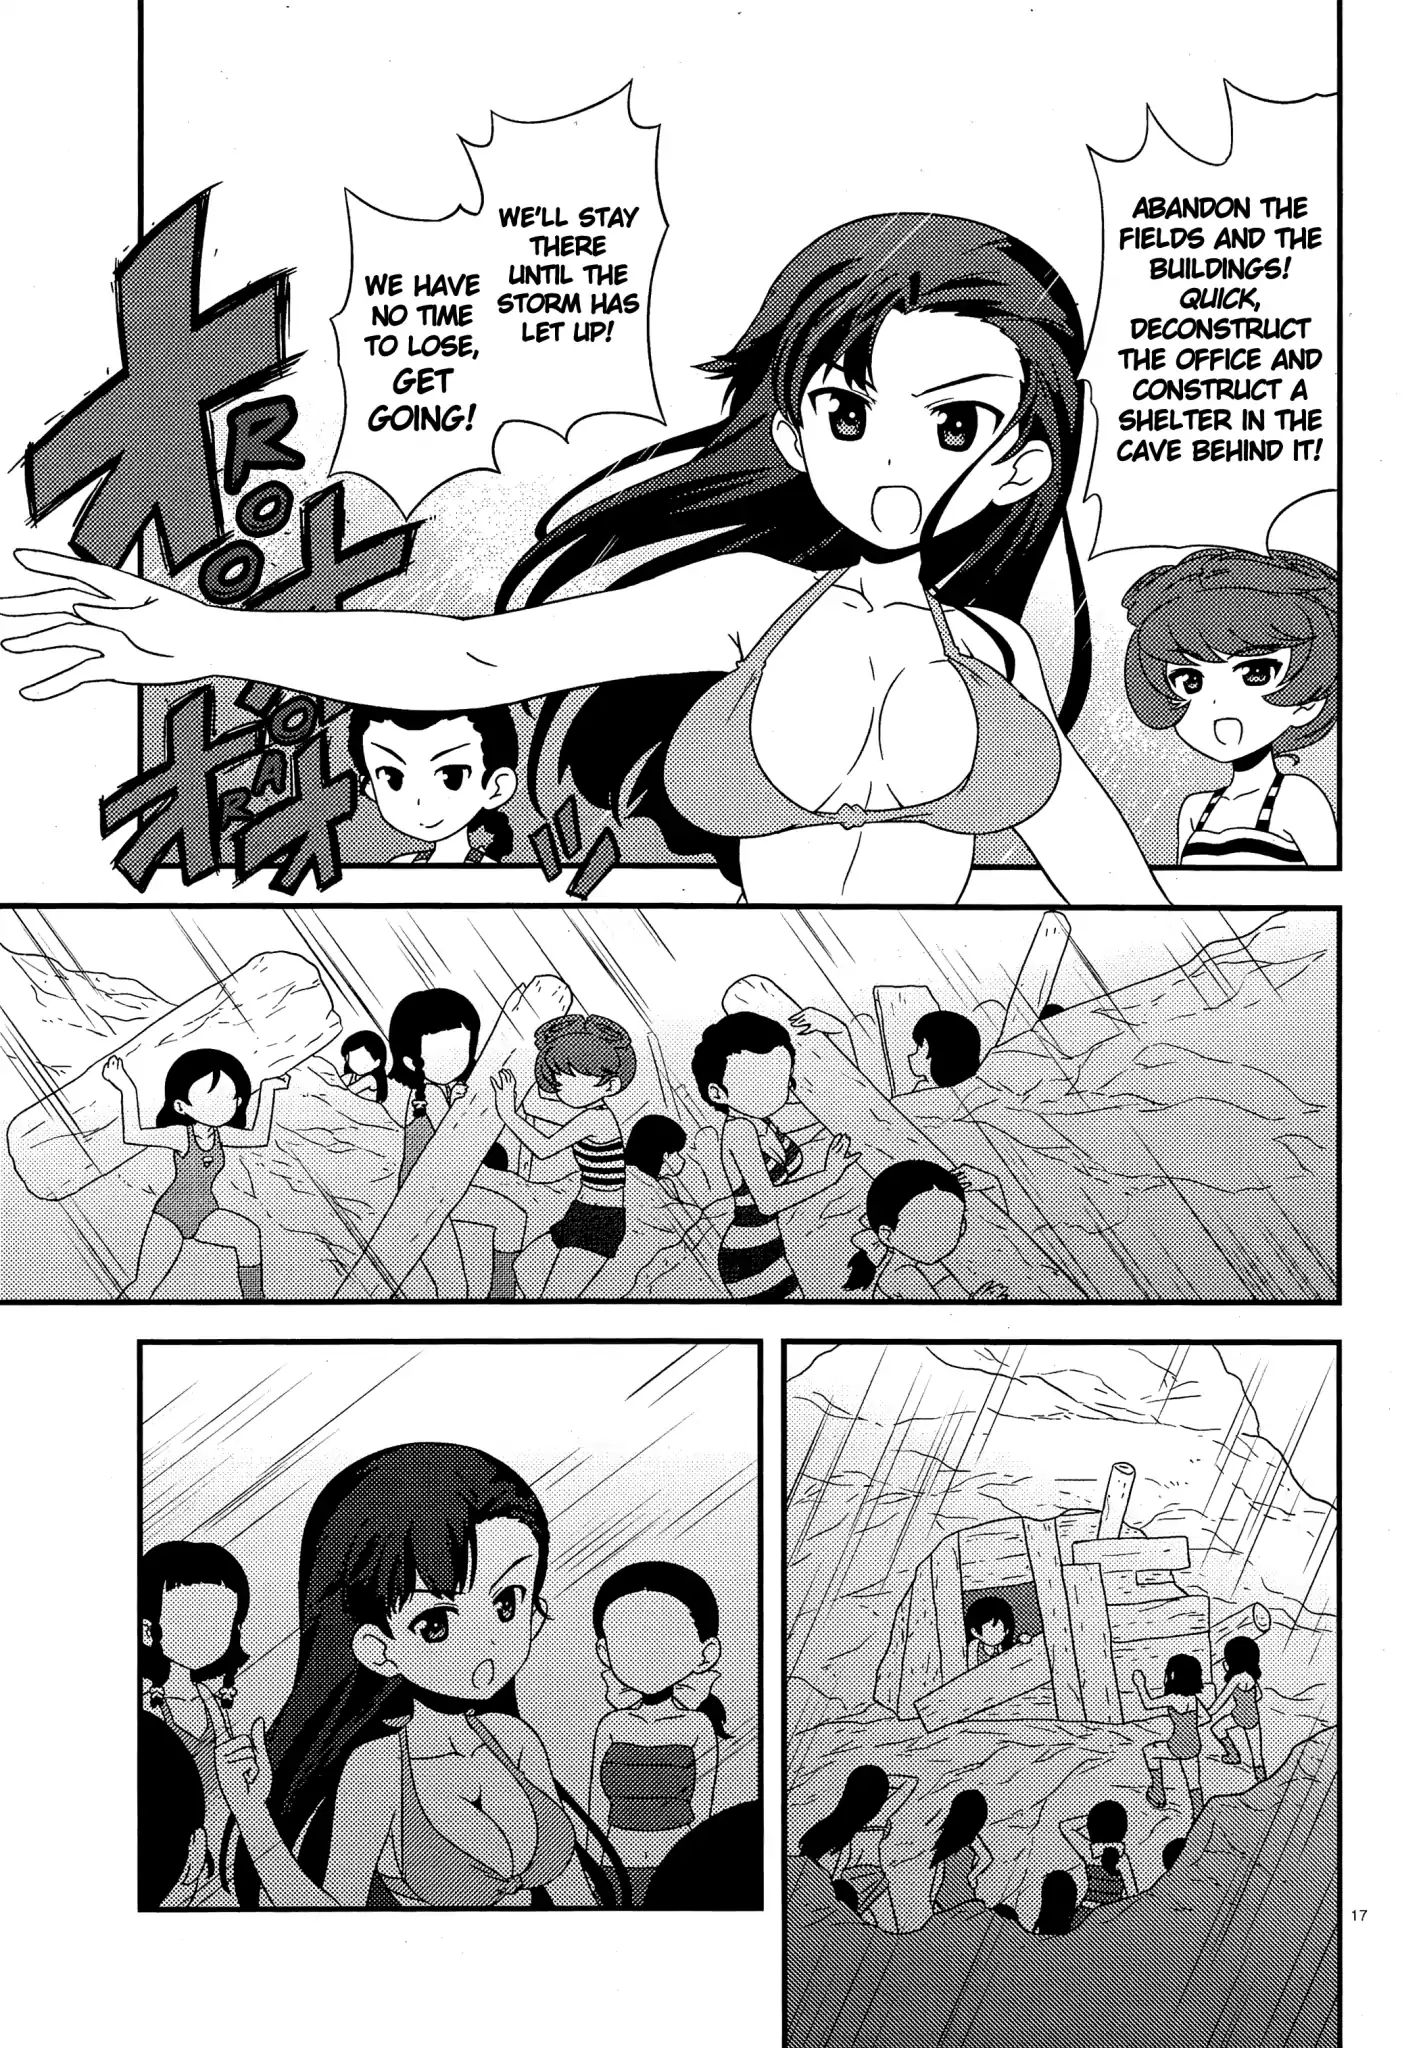 Girls und Panzer: Motto Love Love Sakusen desu! Chapter 39: It is the unexpeted Chihatan Island!